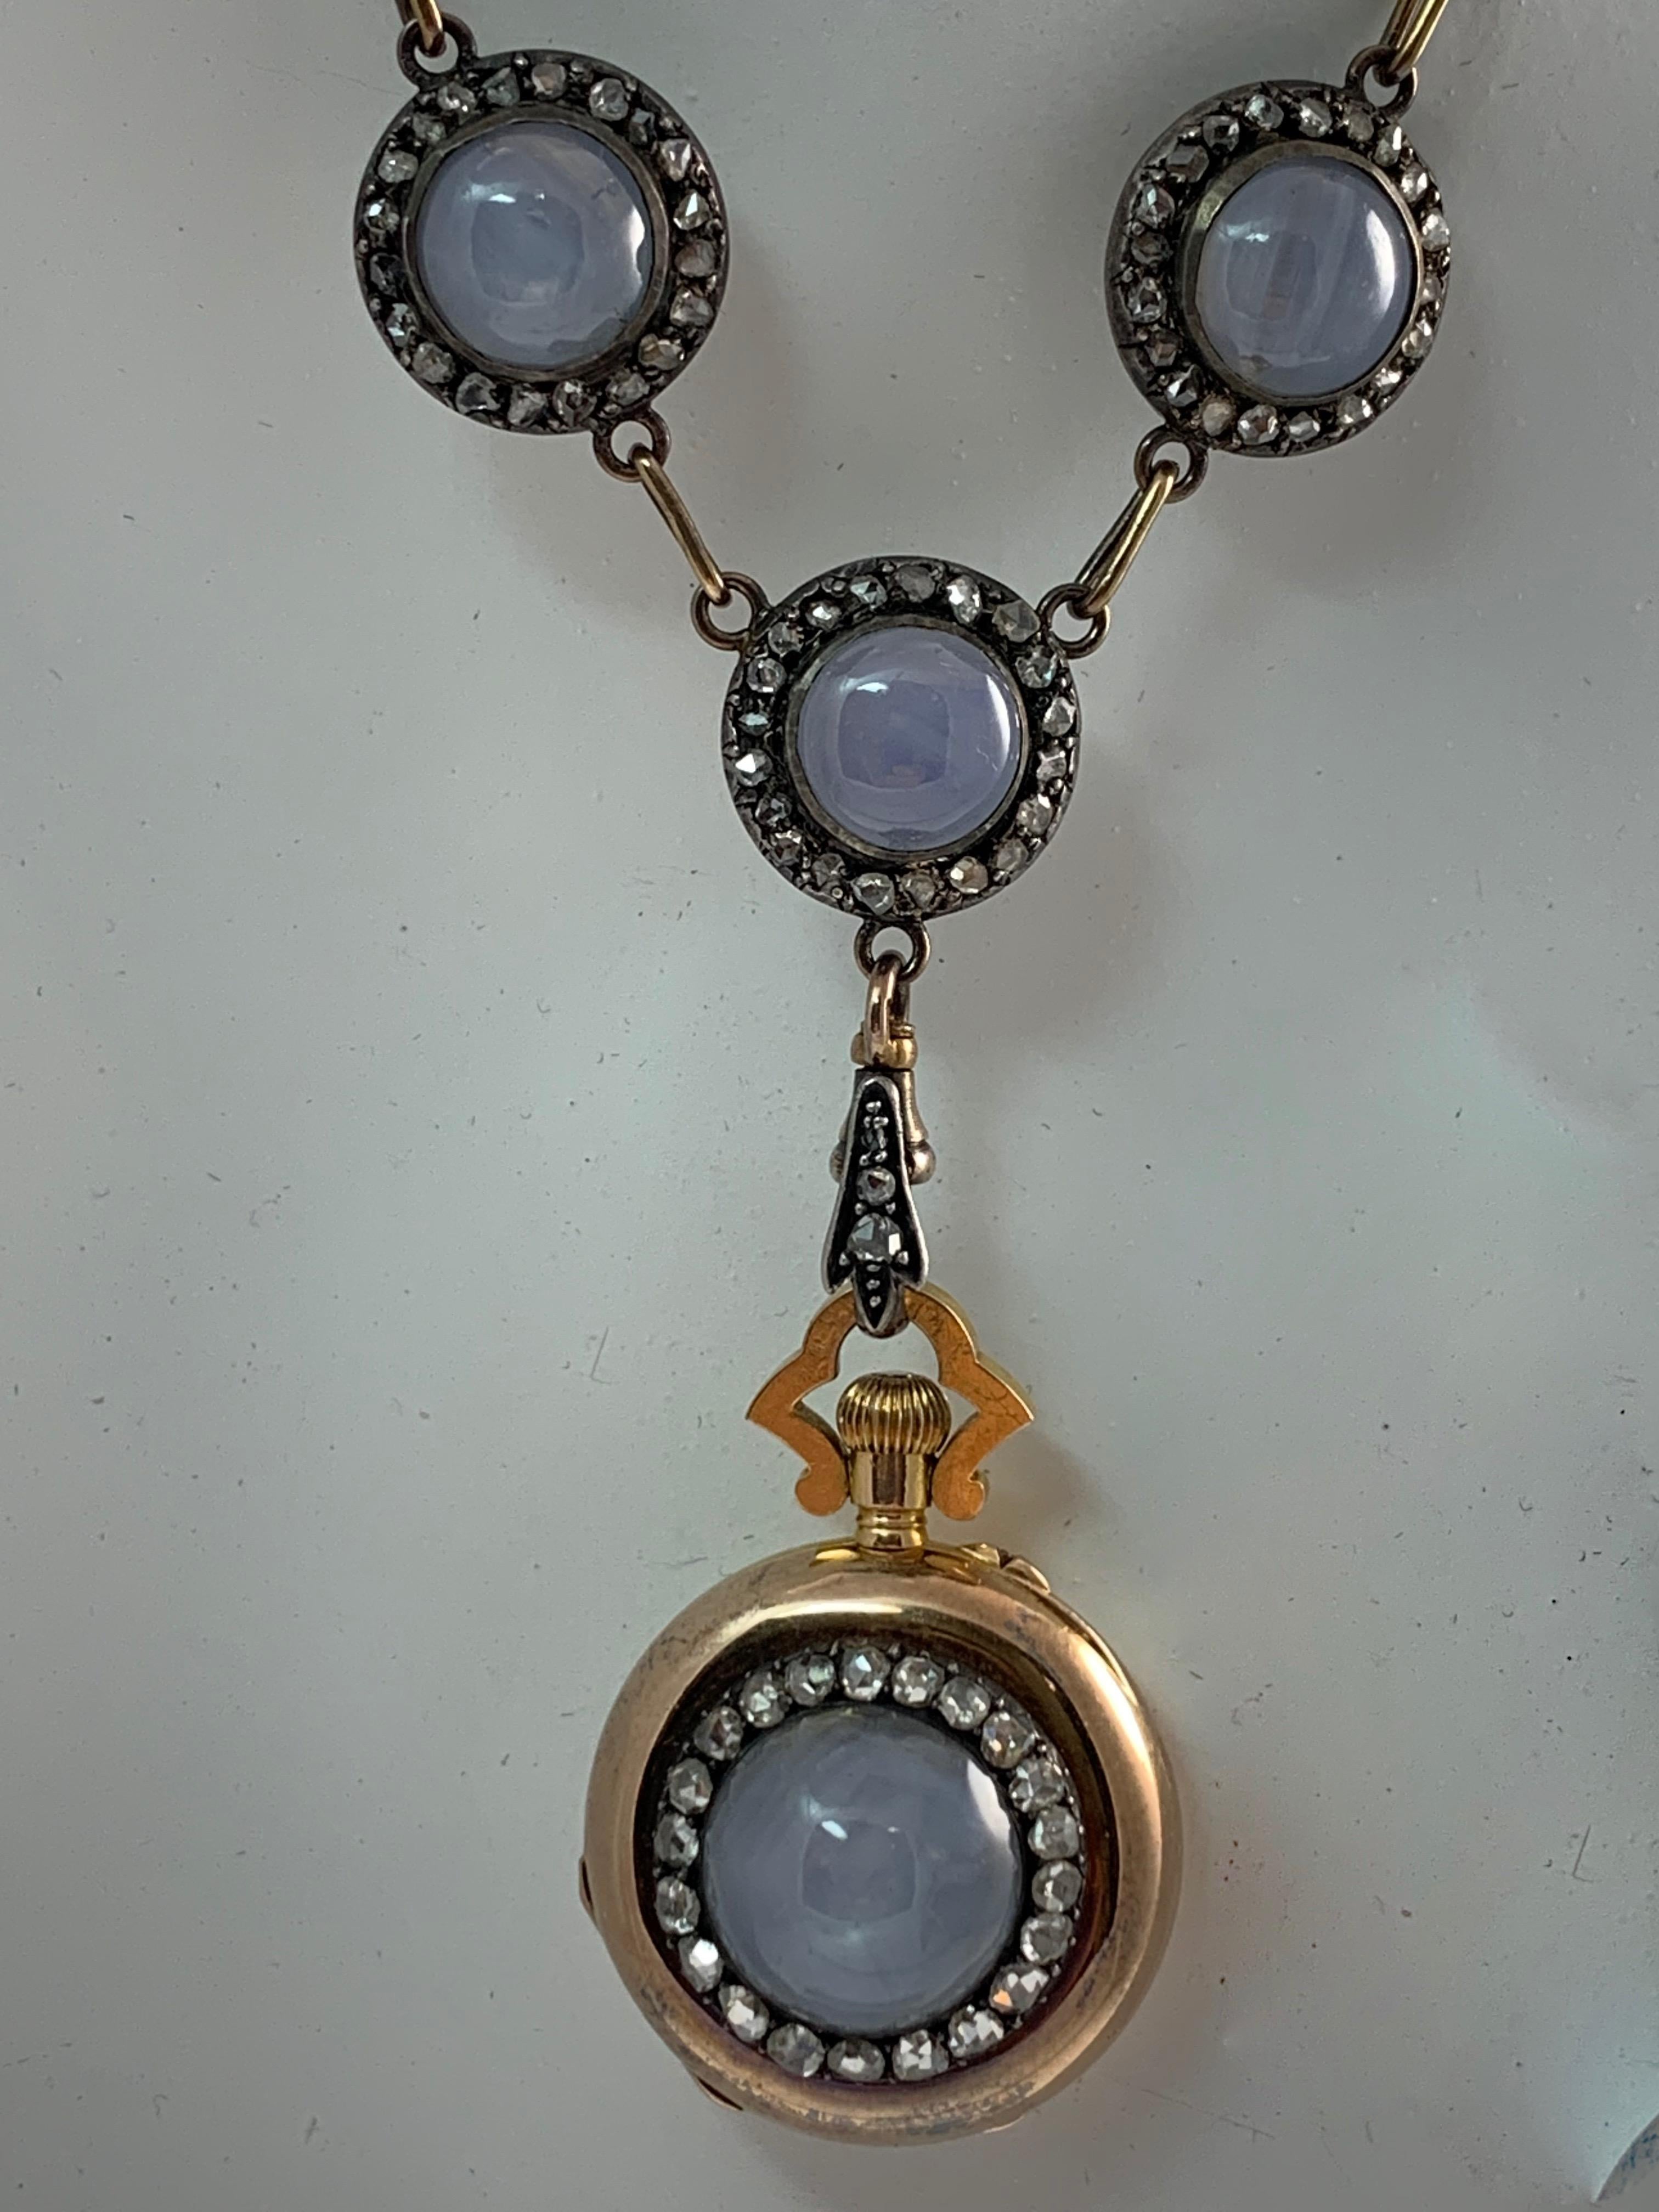 Original Boucheron Star Sapphire and Diamond Gold Necklace circa 1900 with Clock For Sale 4